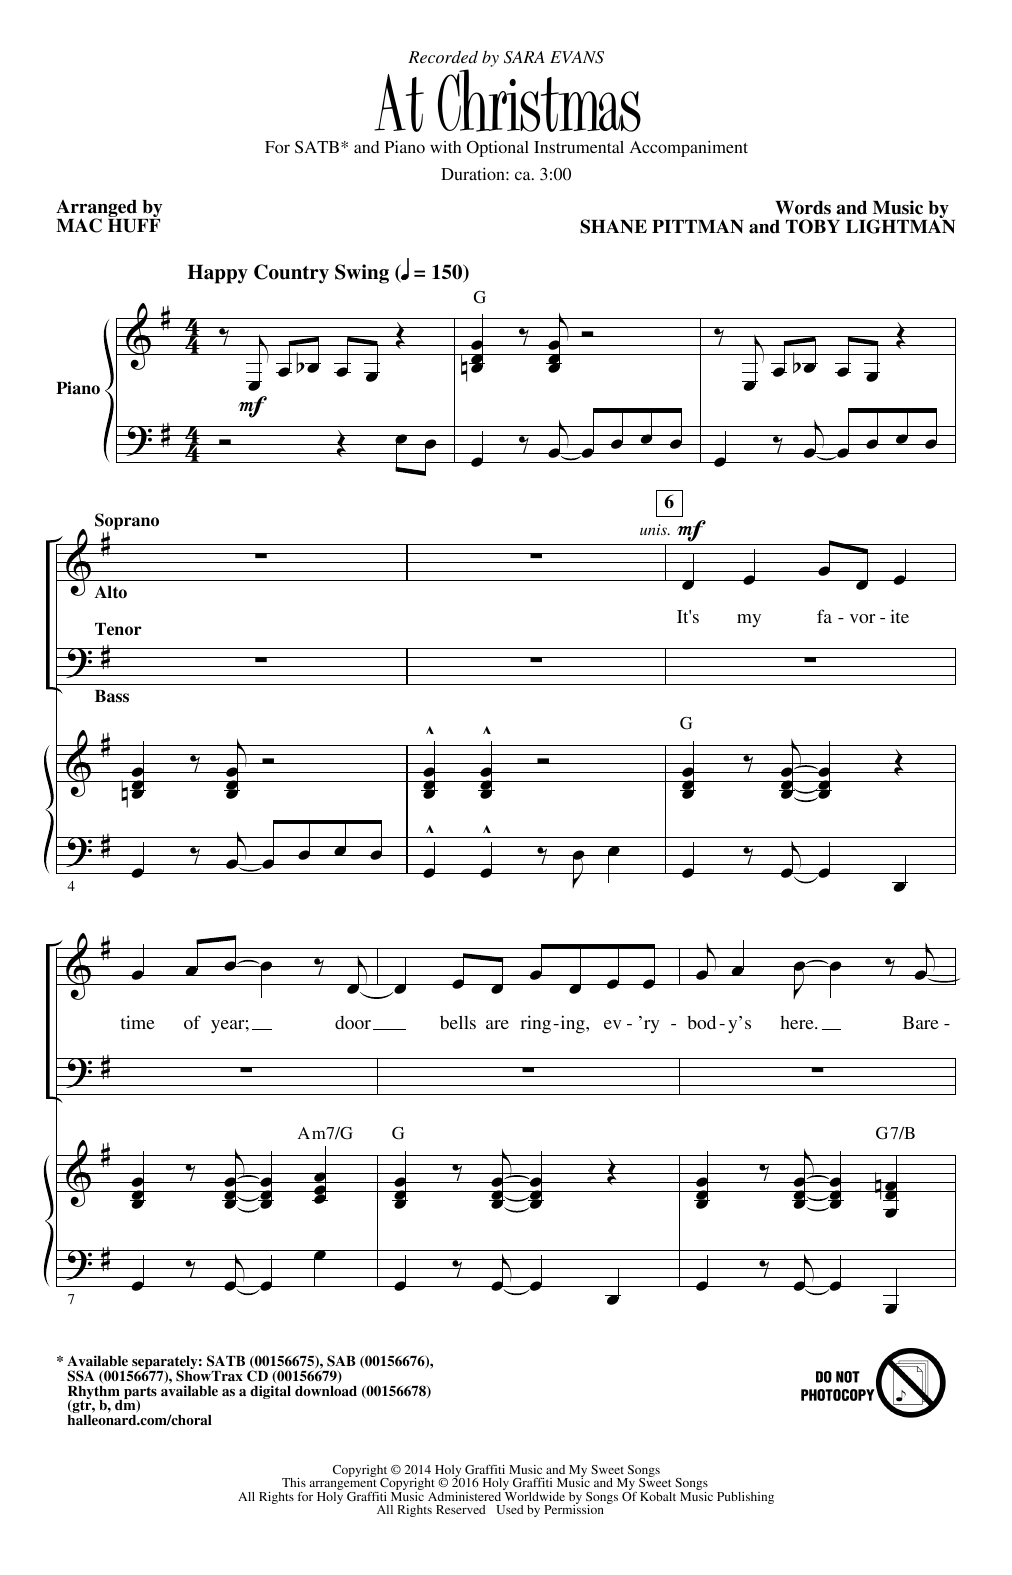 Sara Evans At Christmas (arr. Mac Huff) Sheet Music Notes & Chords for SATB - Download or Print PDF